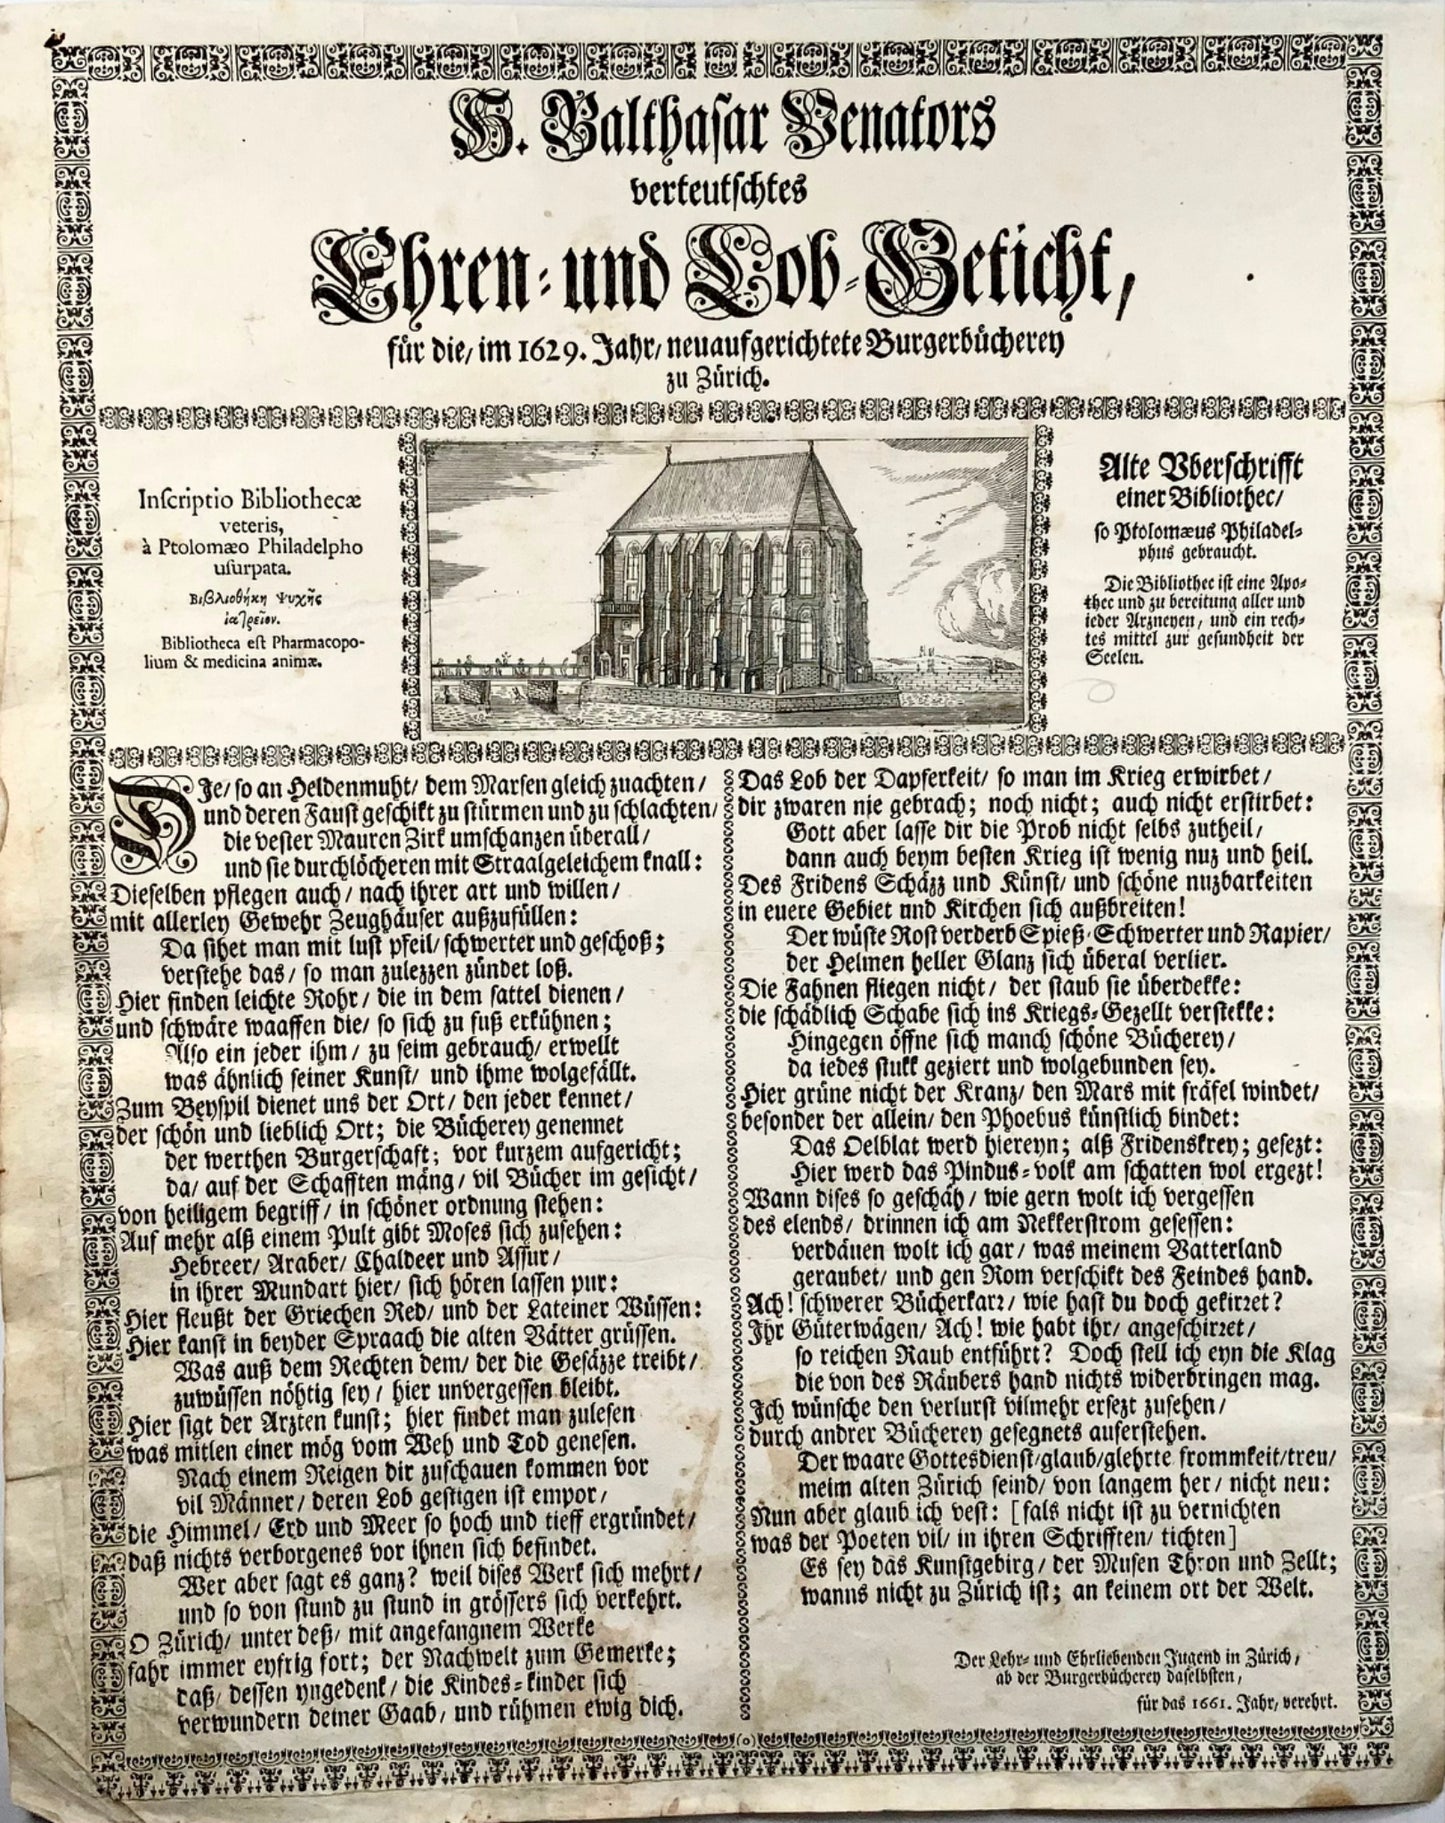 1661 Journal, Ode à la bibliothèque municipale, Zurich, Suisse, bibliothécographie